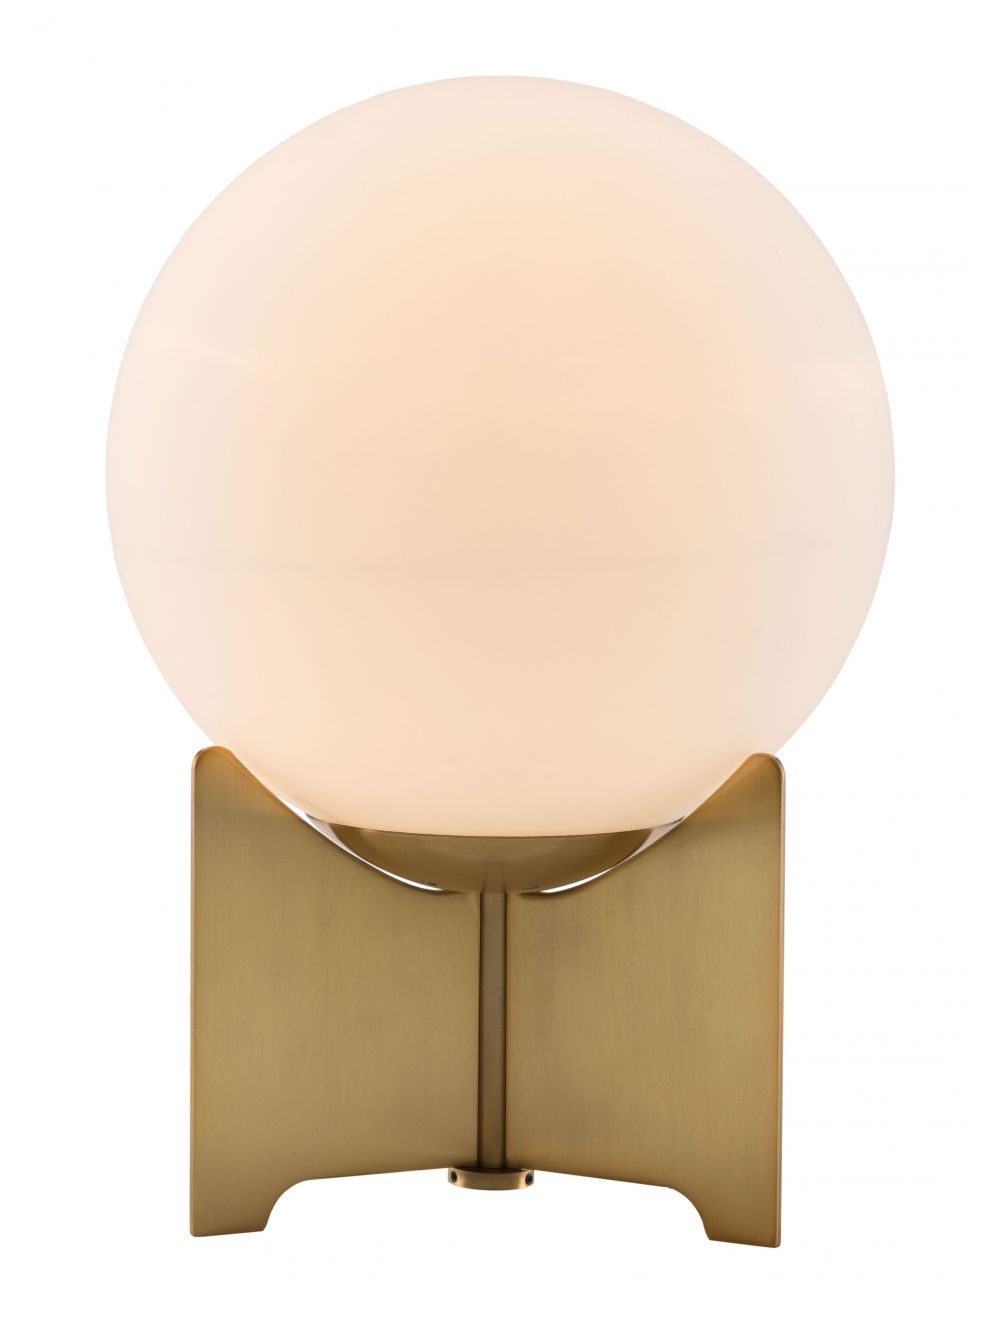 Globus Table Lamp